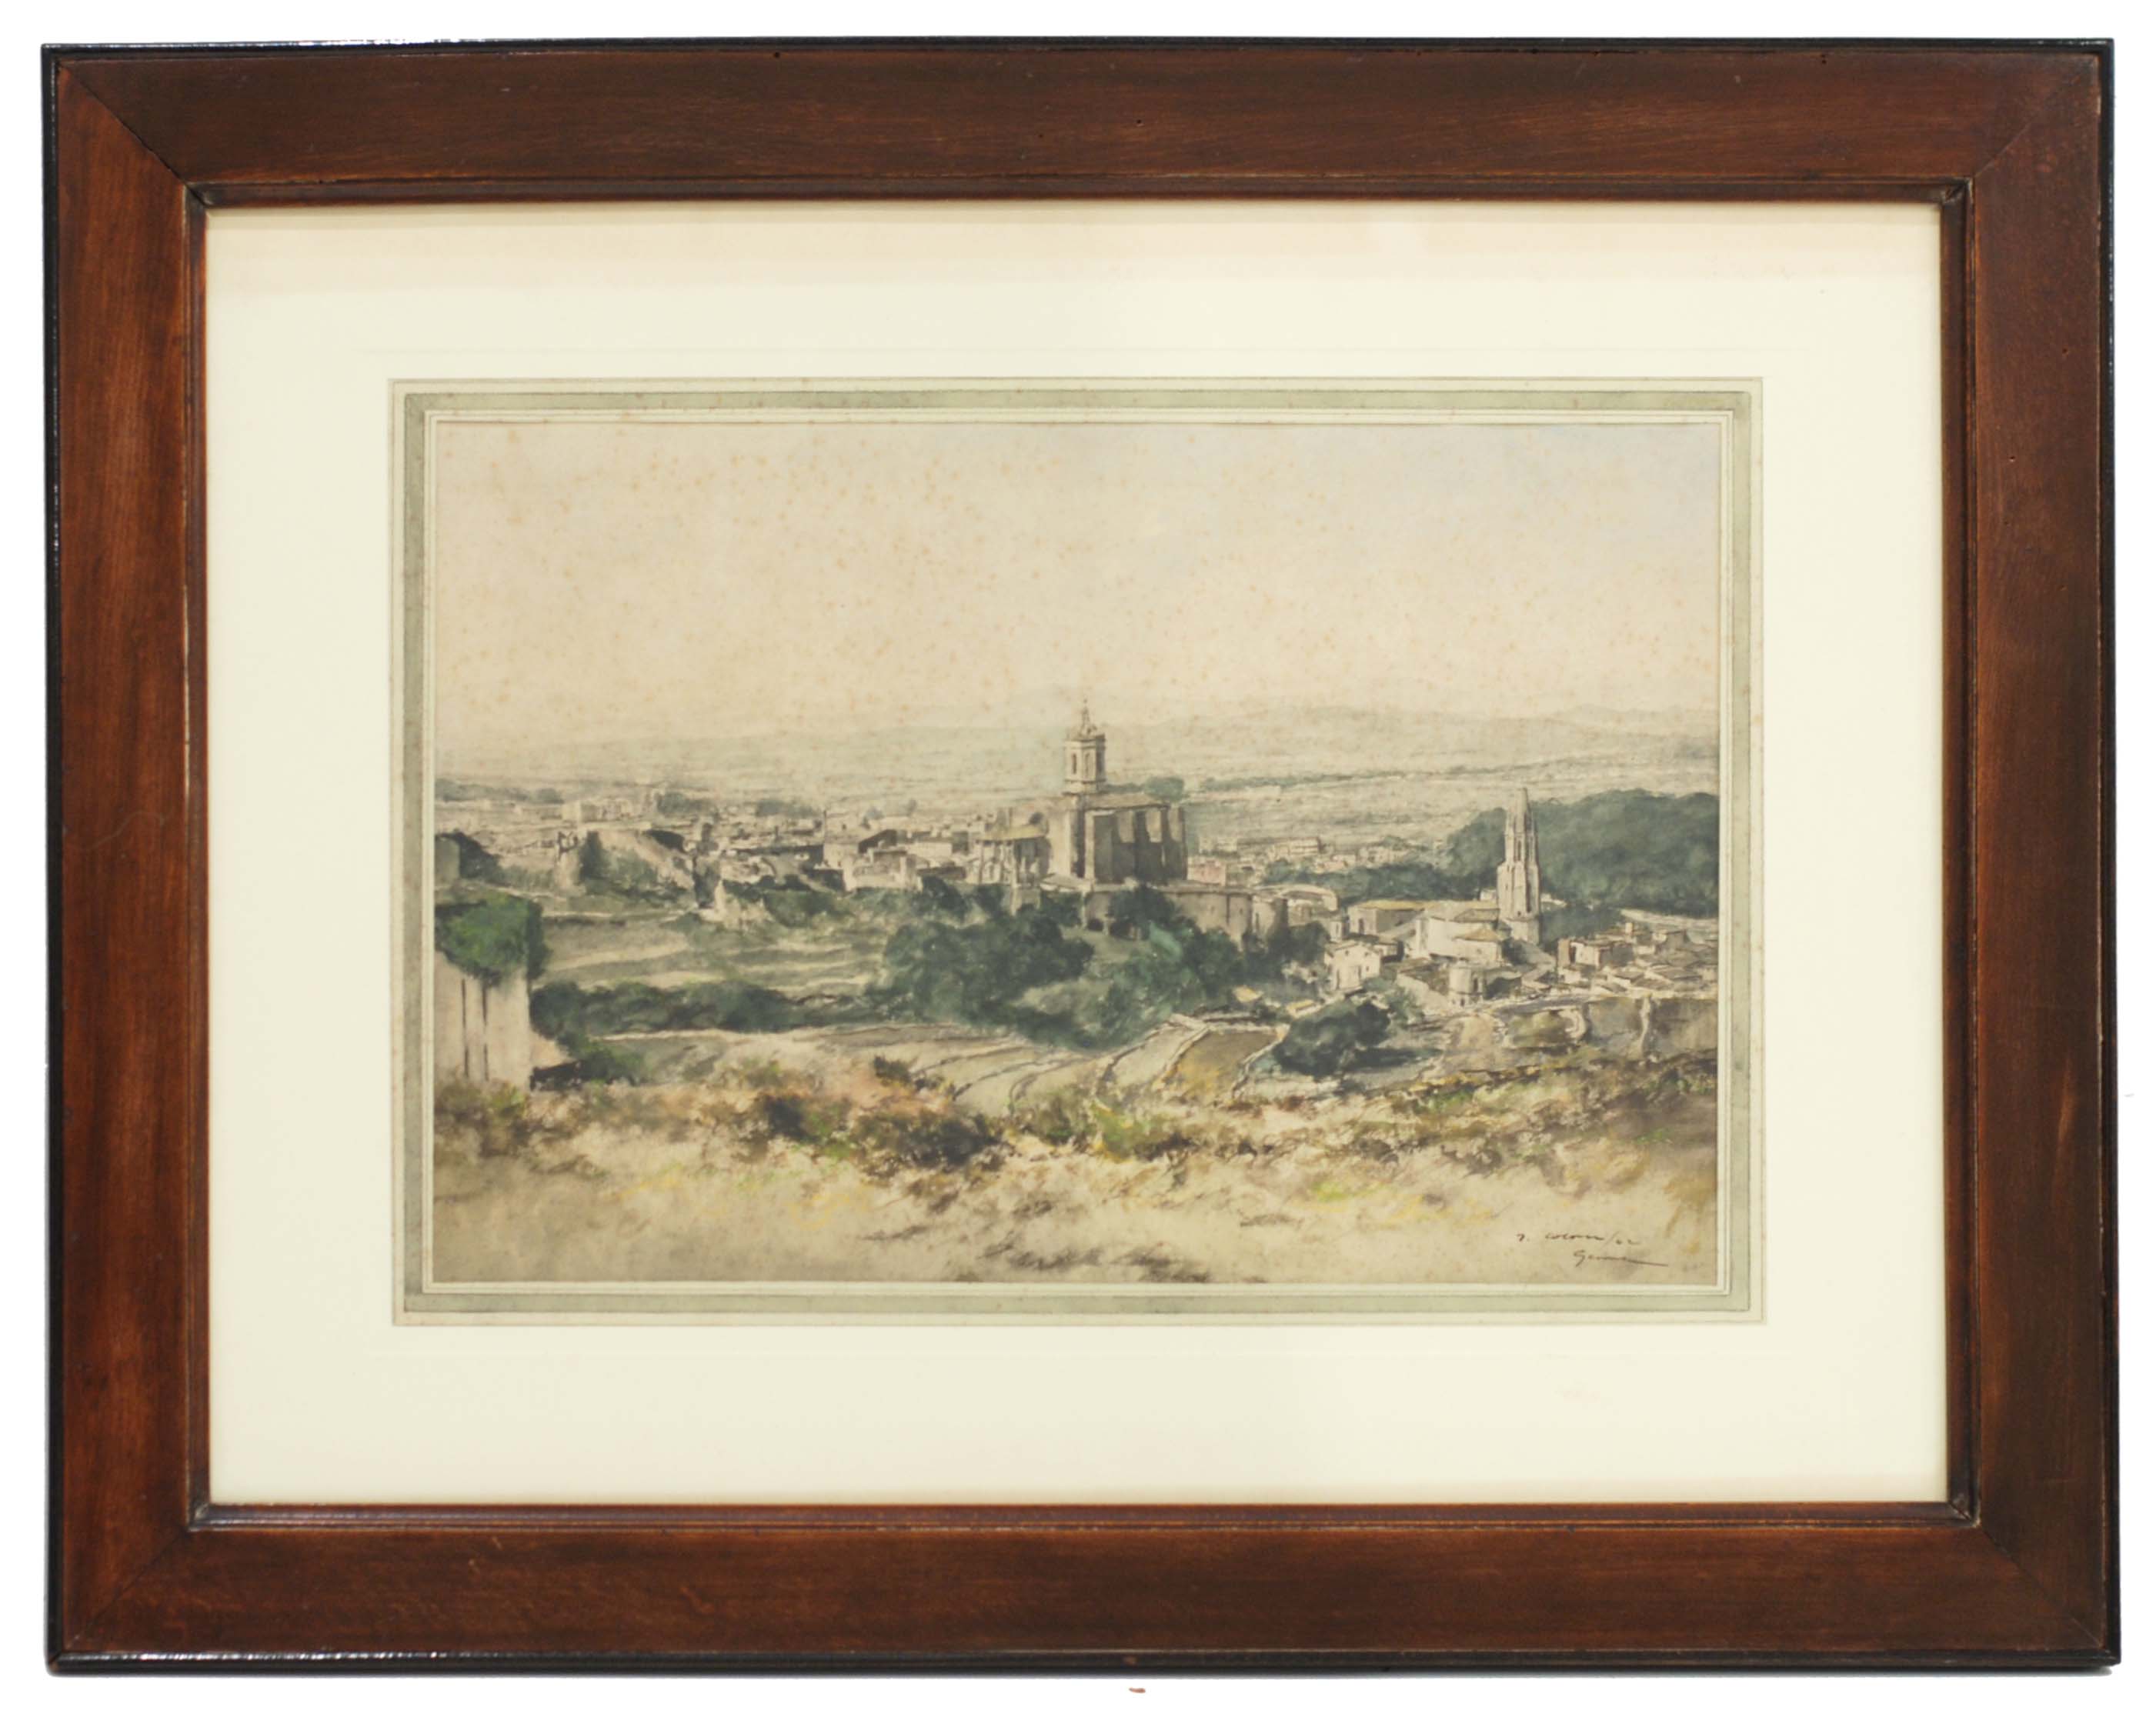 JOAN COLOM I AUGUSTI (1879-1969). "Vista de Girona".